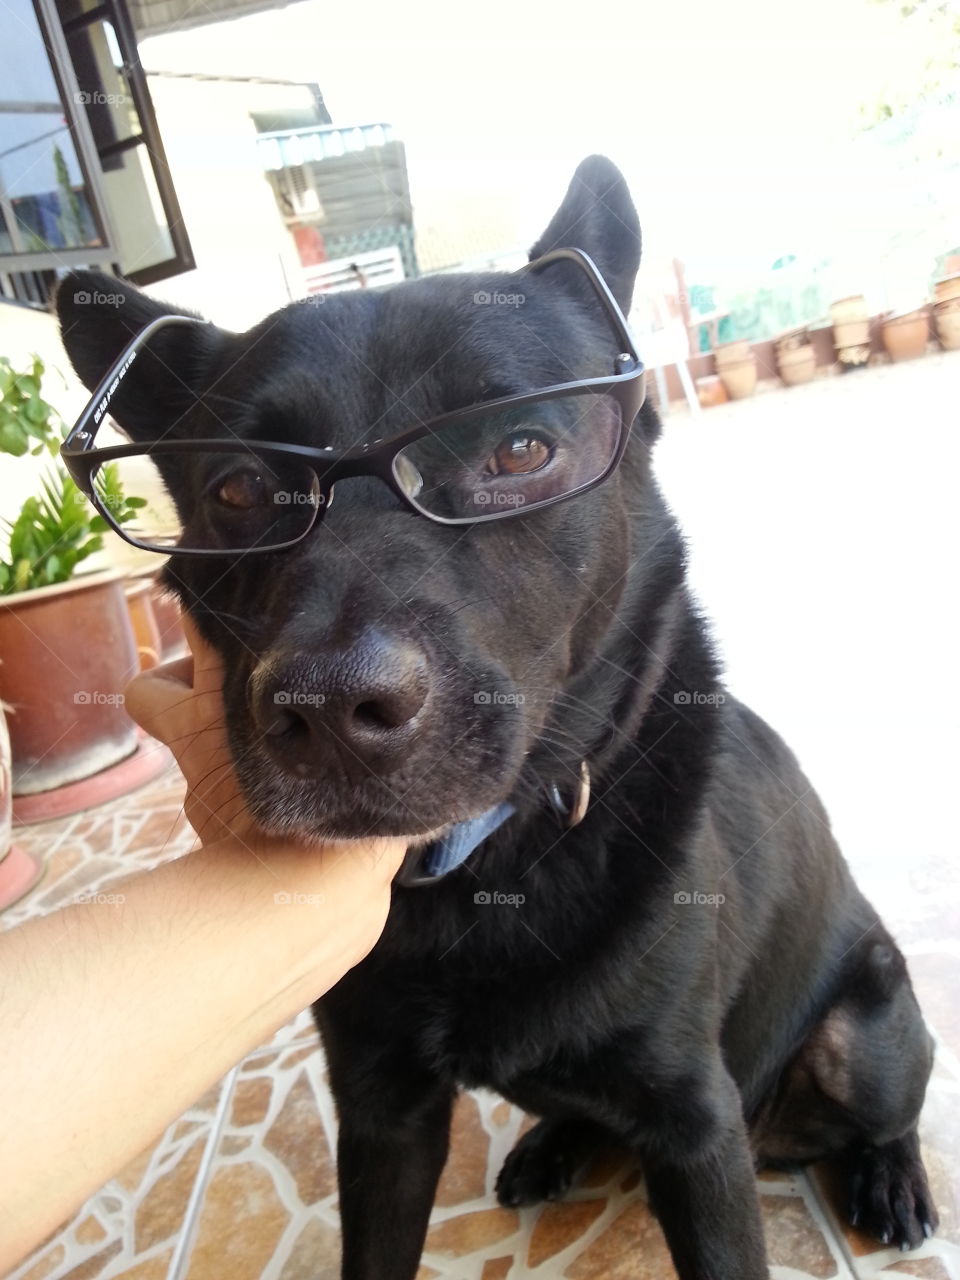 A black dog with eyeglasses